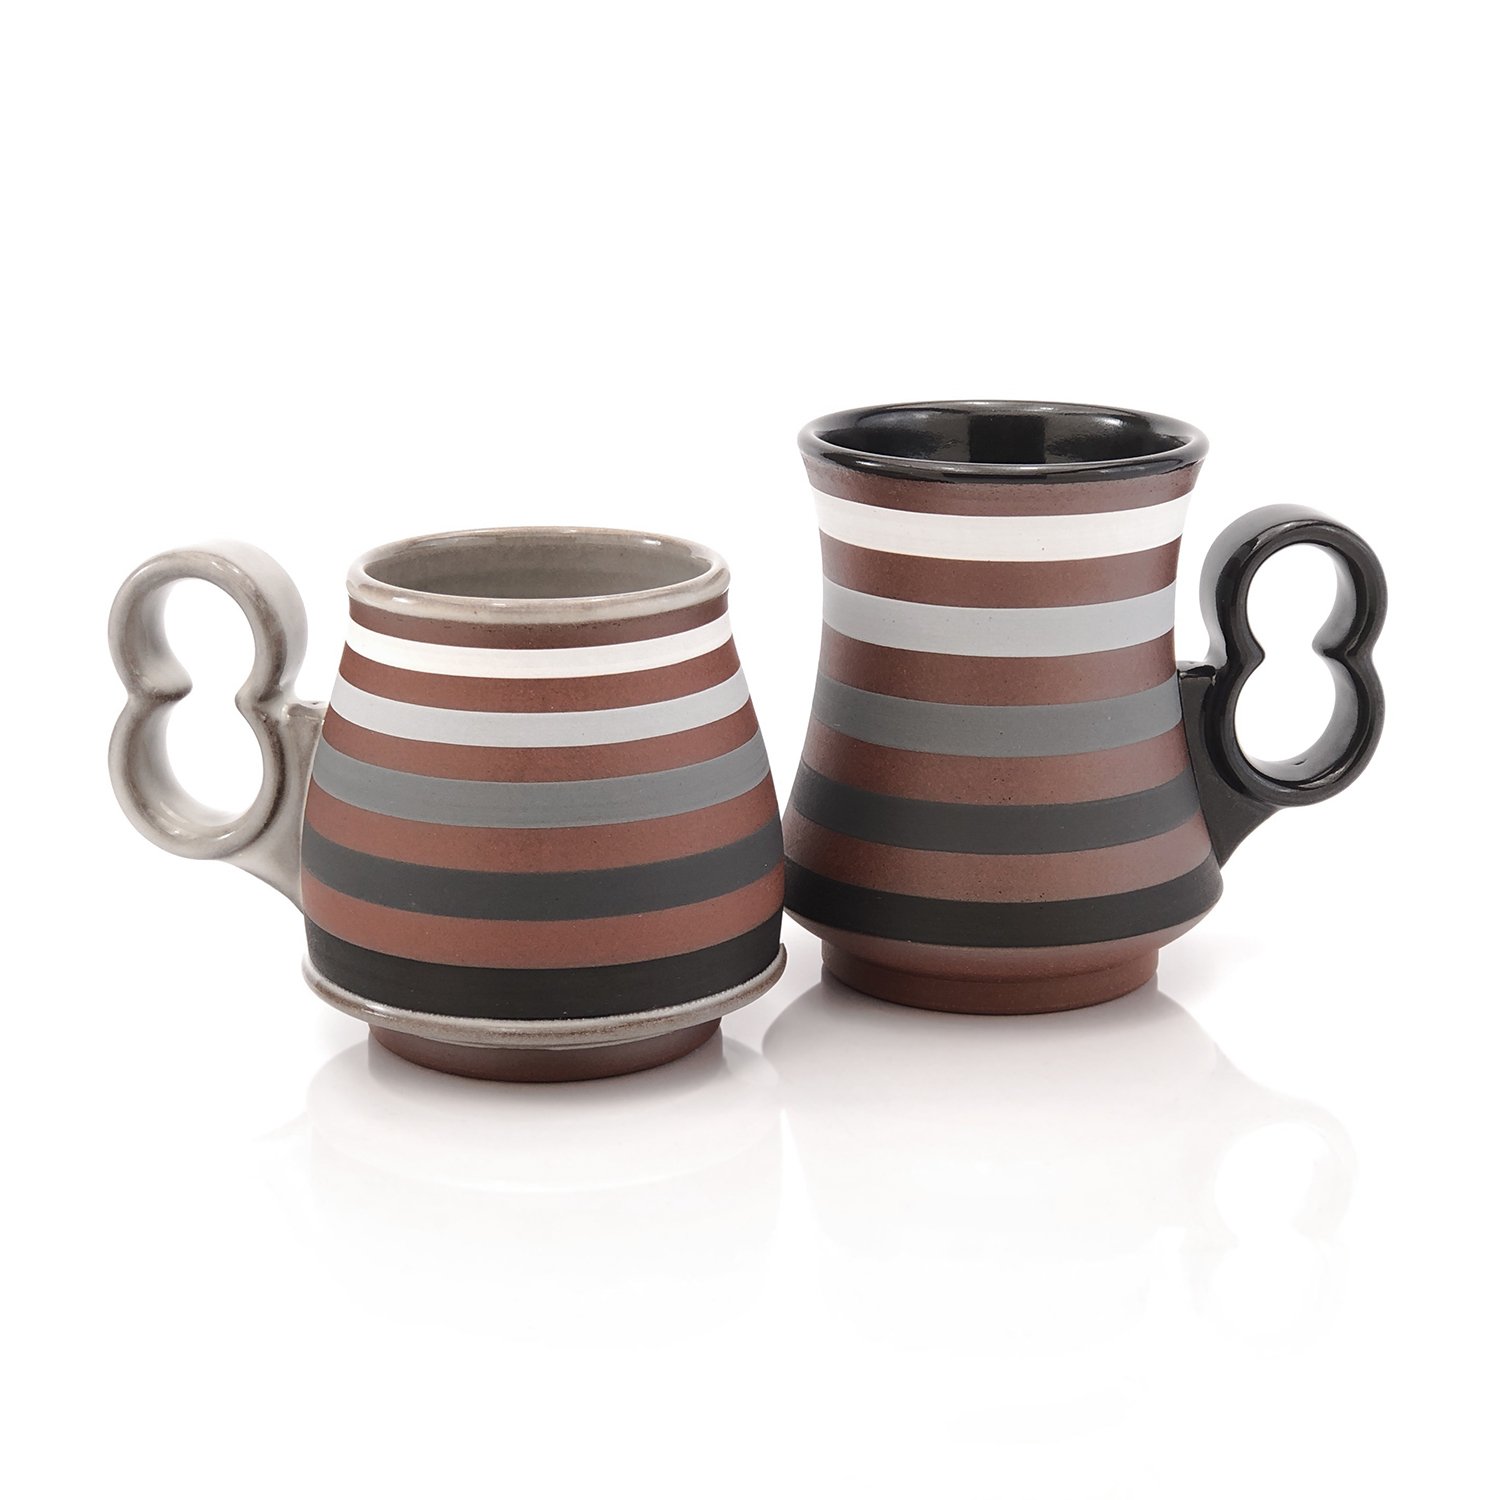 Greyscale striped mugs